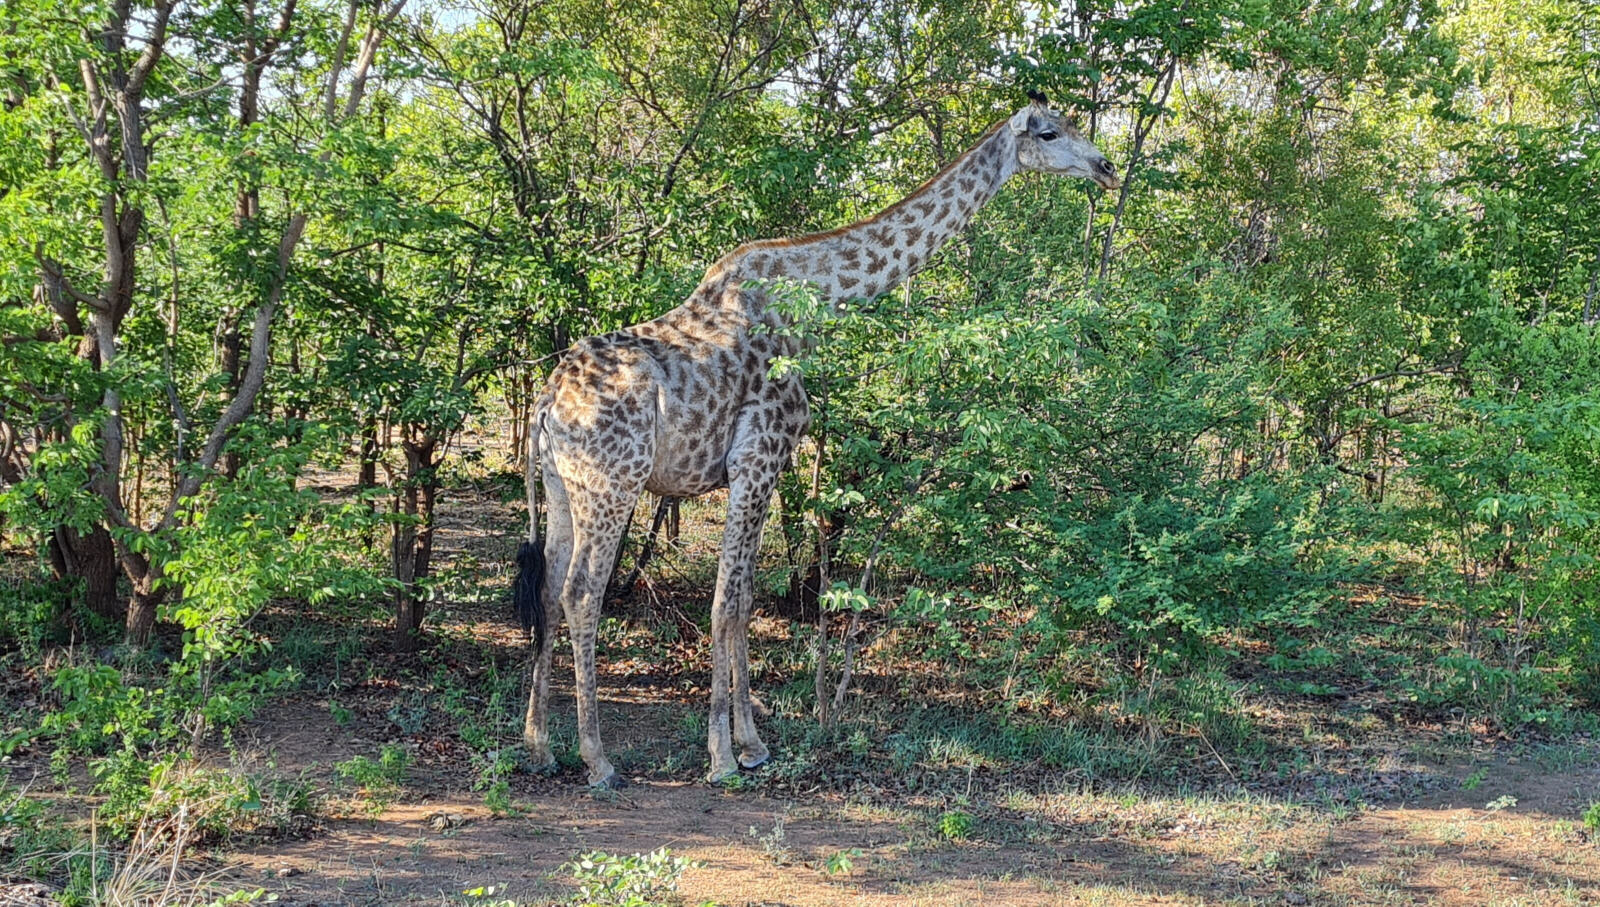 A giraffe by the road near Livingstone, Zambia